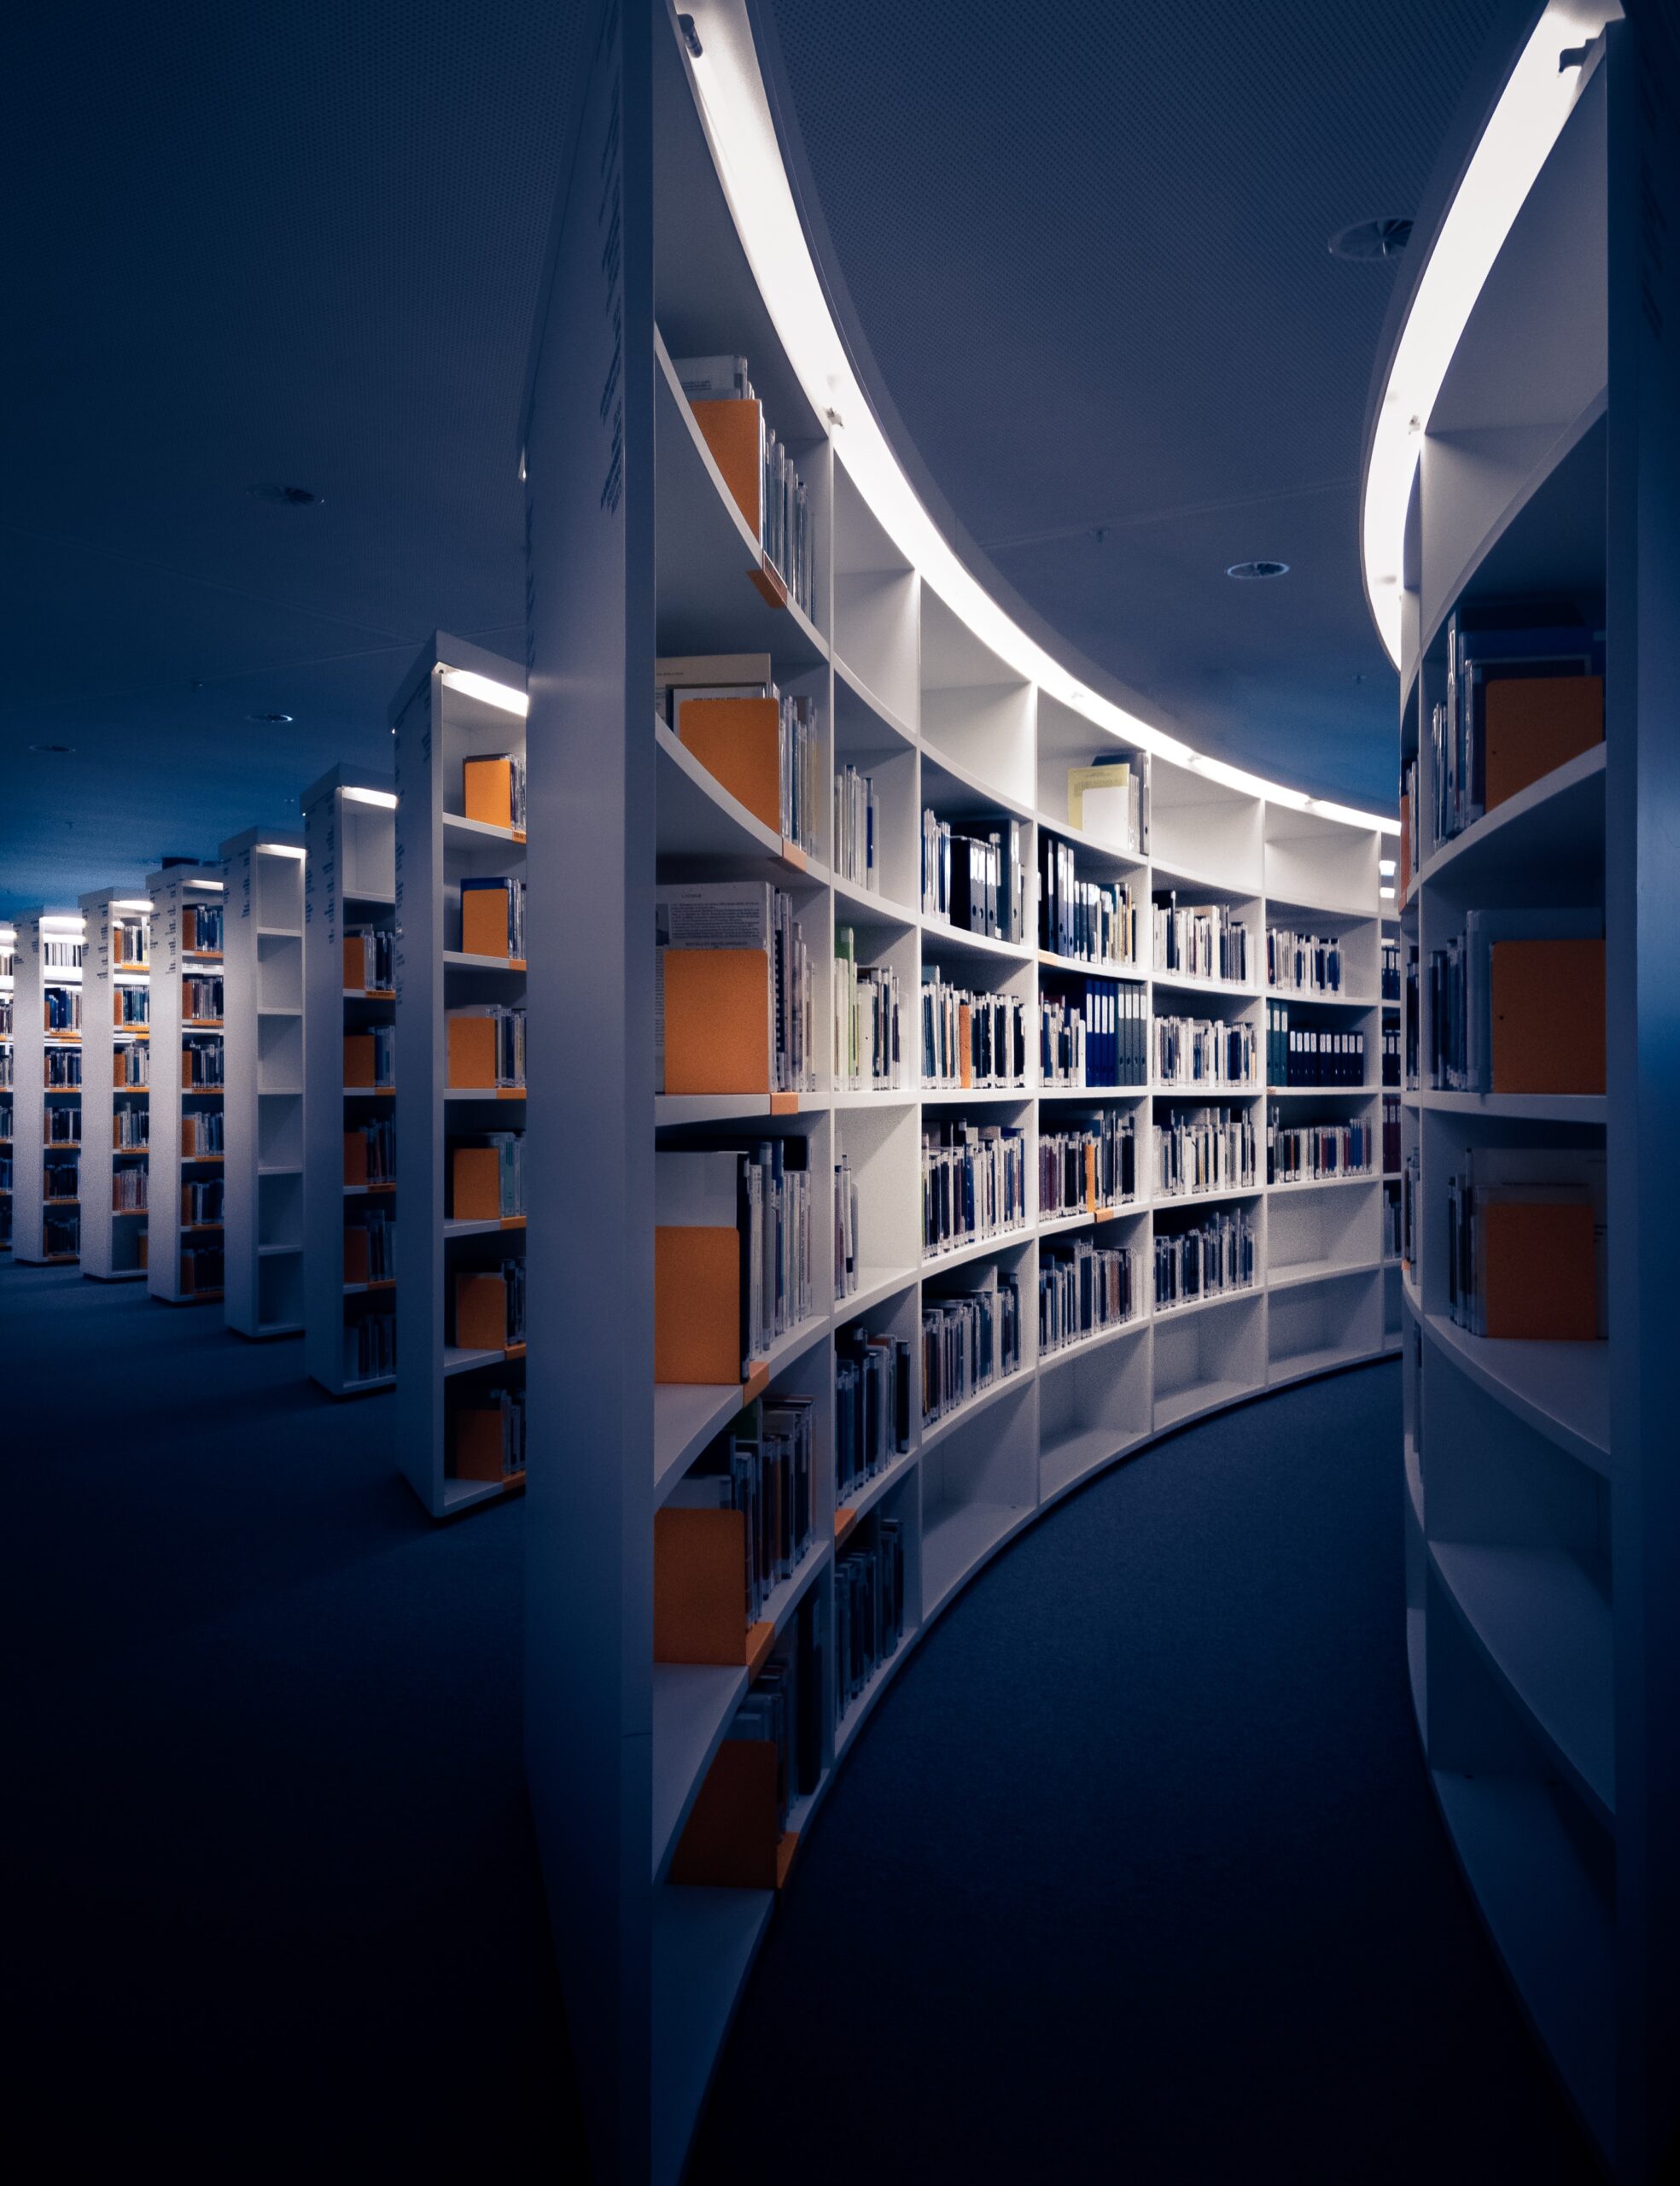 “The Midnight Library” as a Voice Against Societal Noise